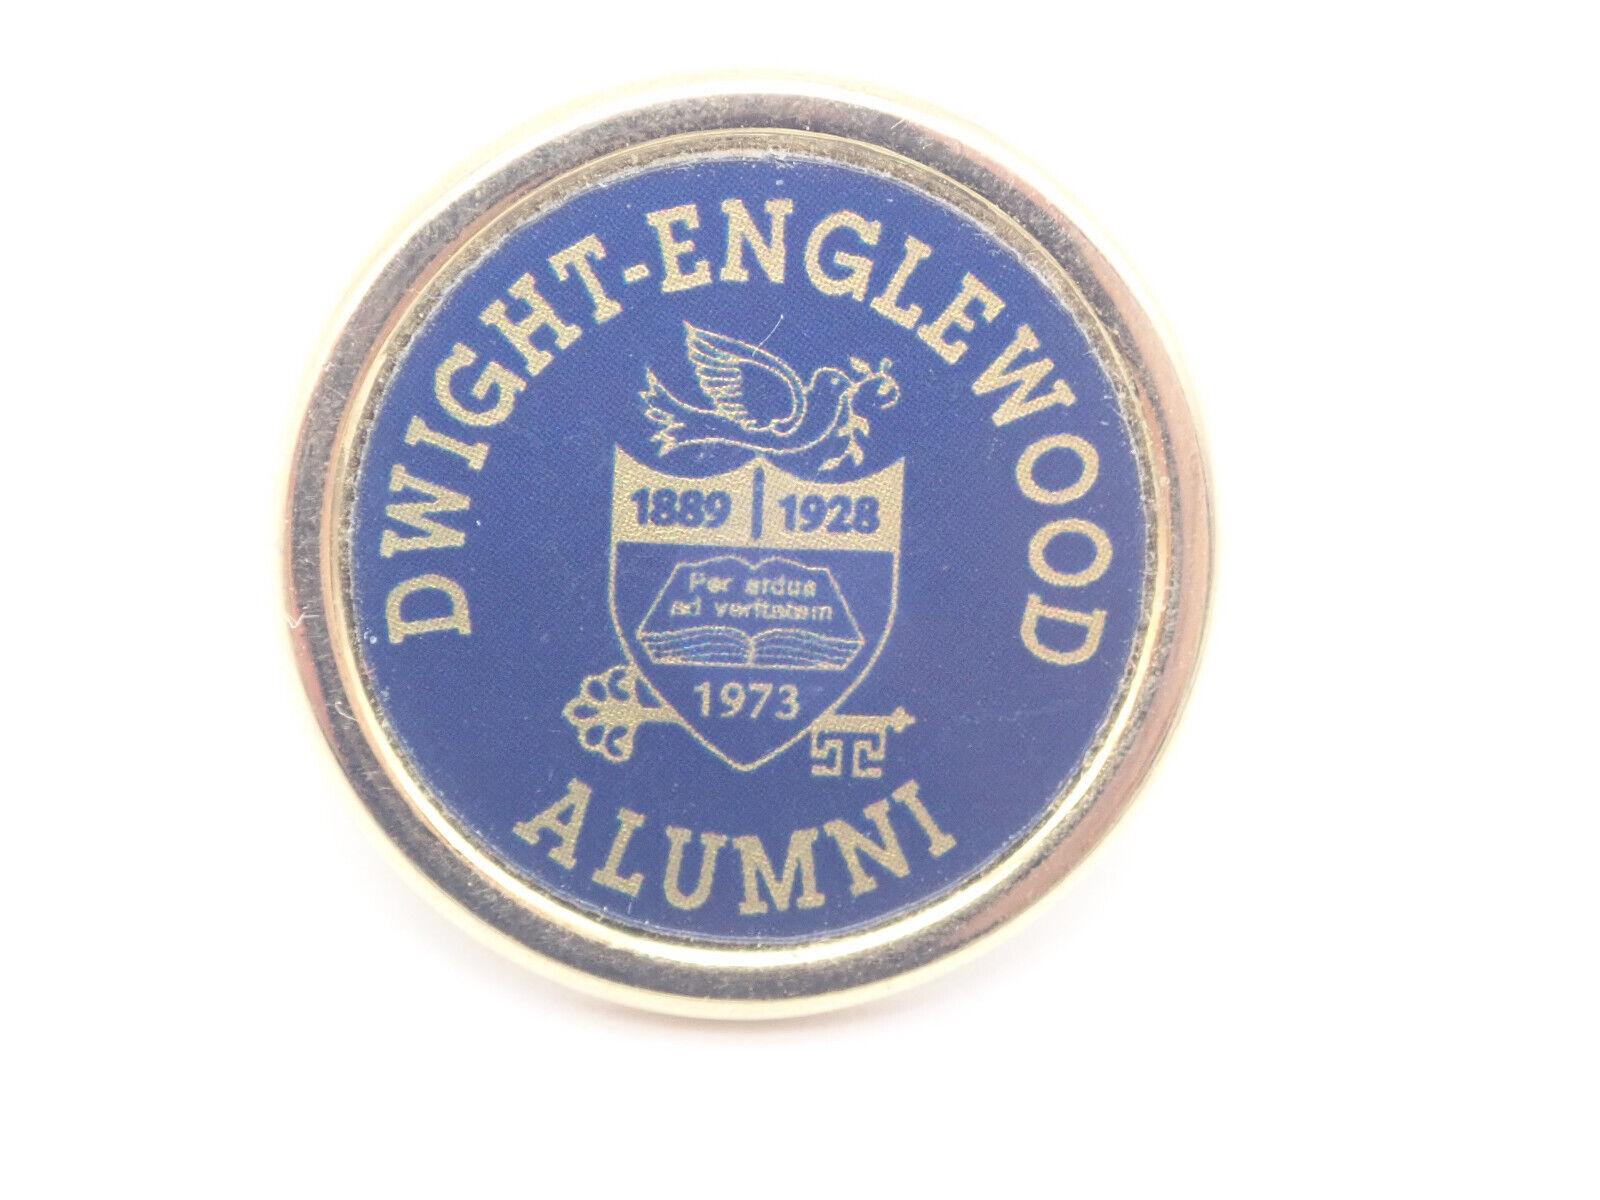 Dwight Englewood alumni Vintage Lapel Pin